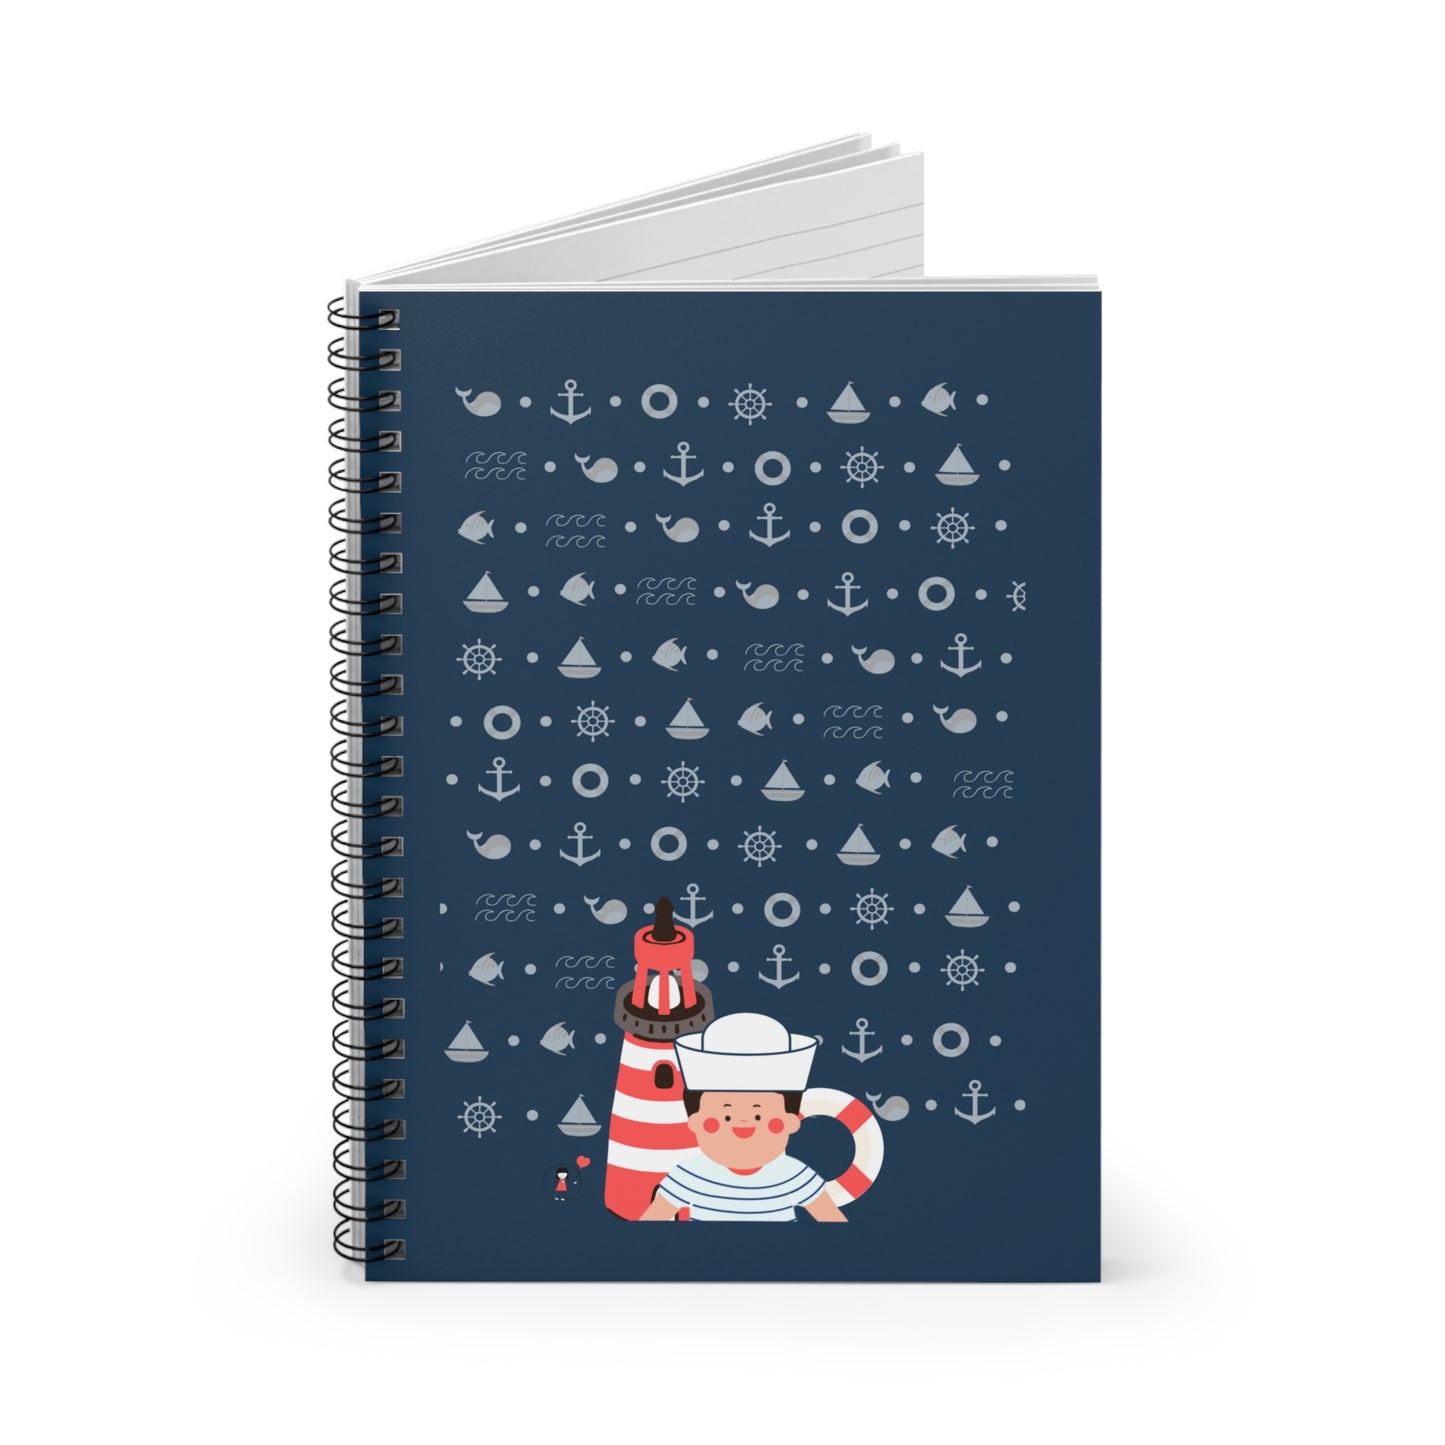 Sailor Collection Spiral Notebook